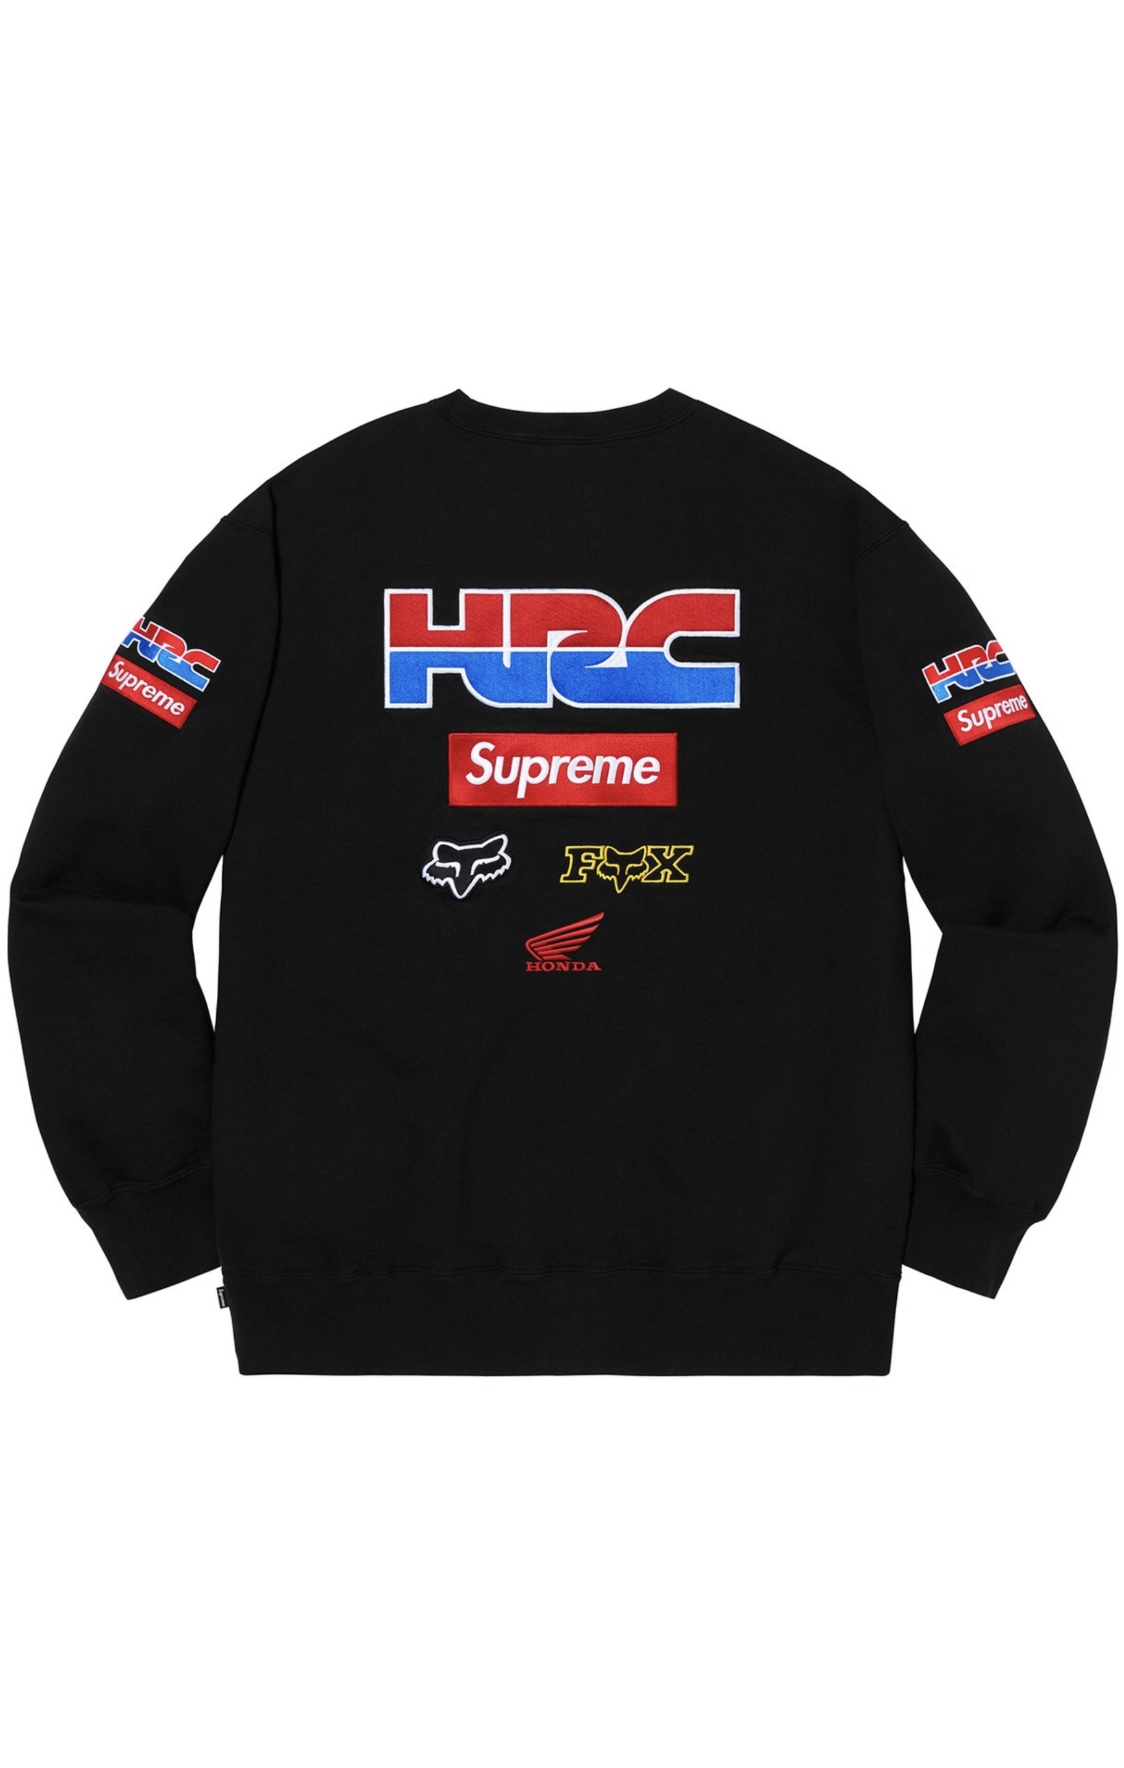 Supreme®/Honda®/Fox® Racing Crewneck – Black - AuthentKicks